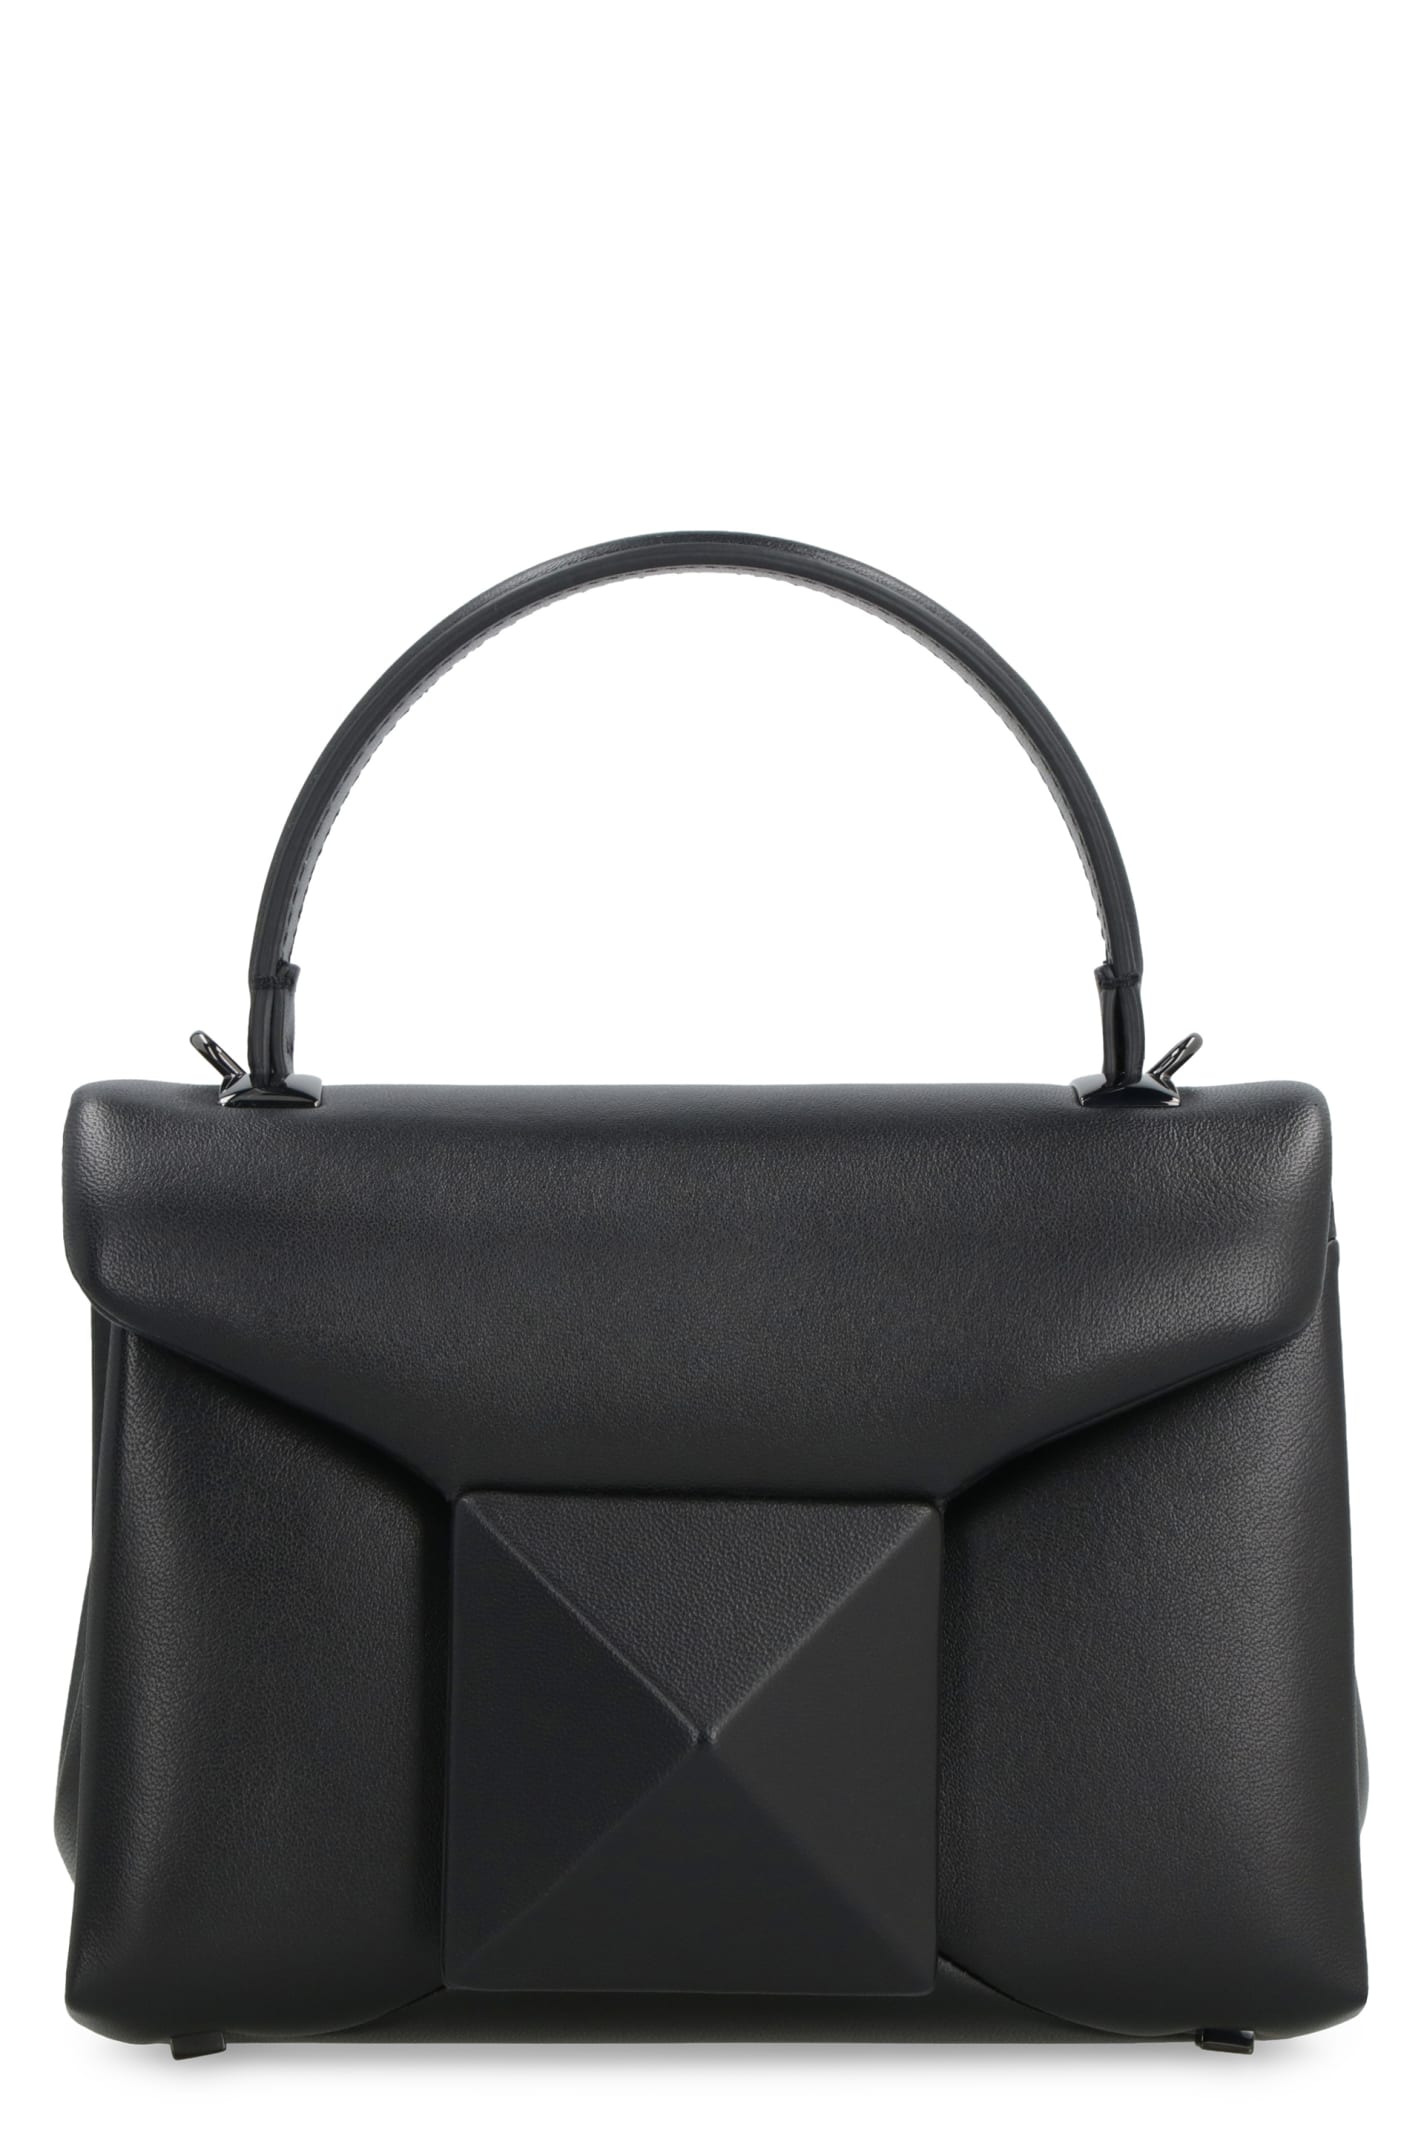 Valentino Garavani Garavani - One Stud Leather Mini Handbag